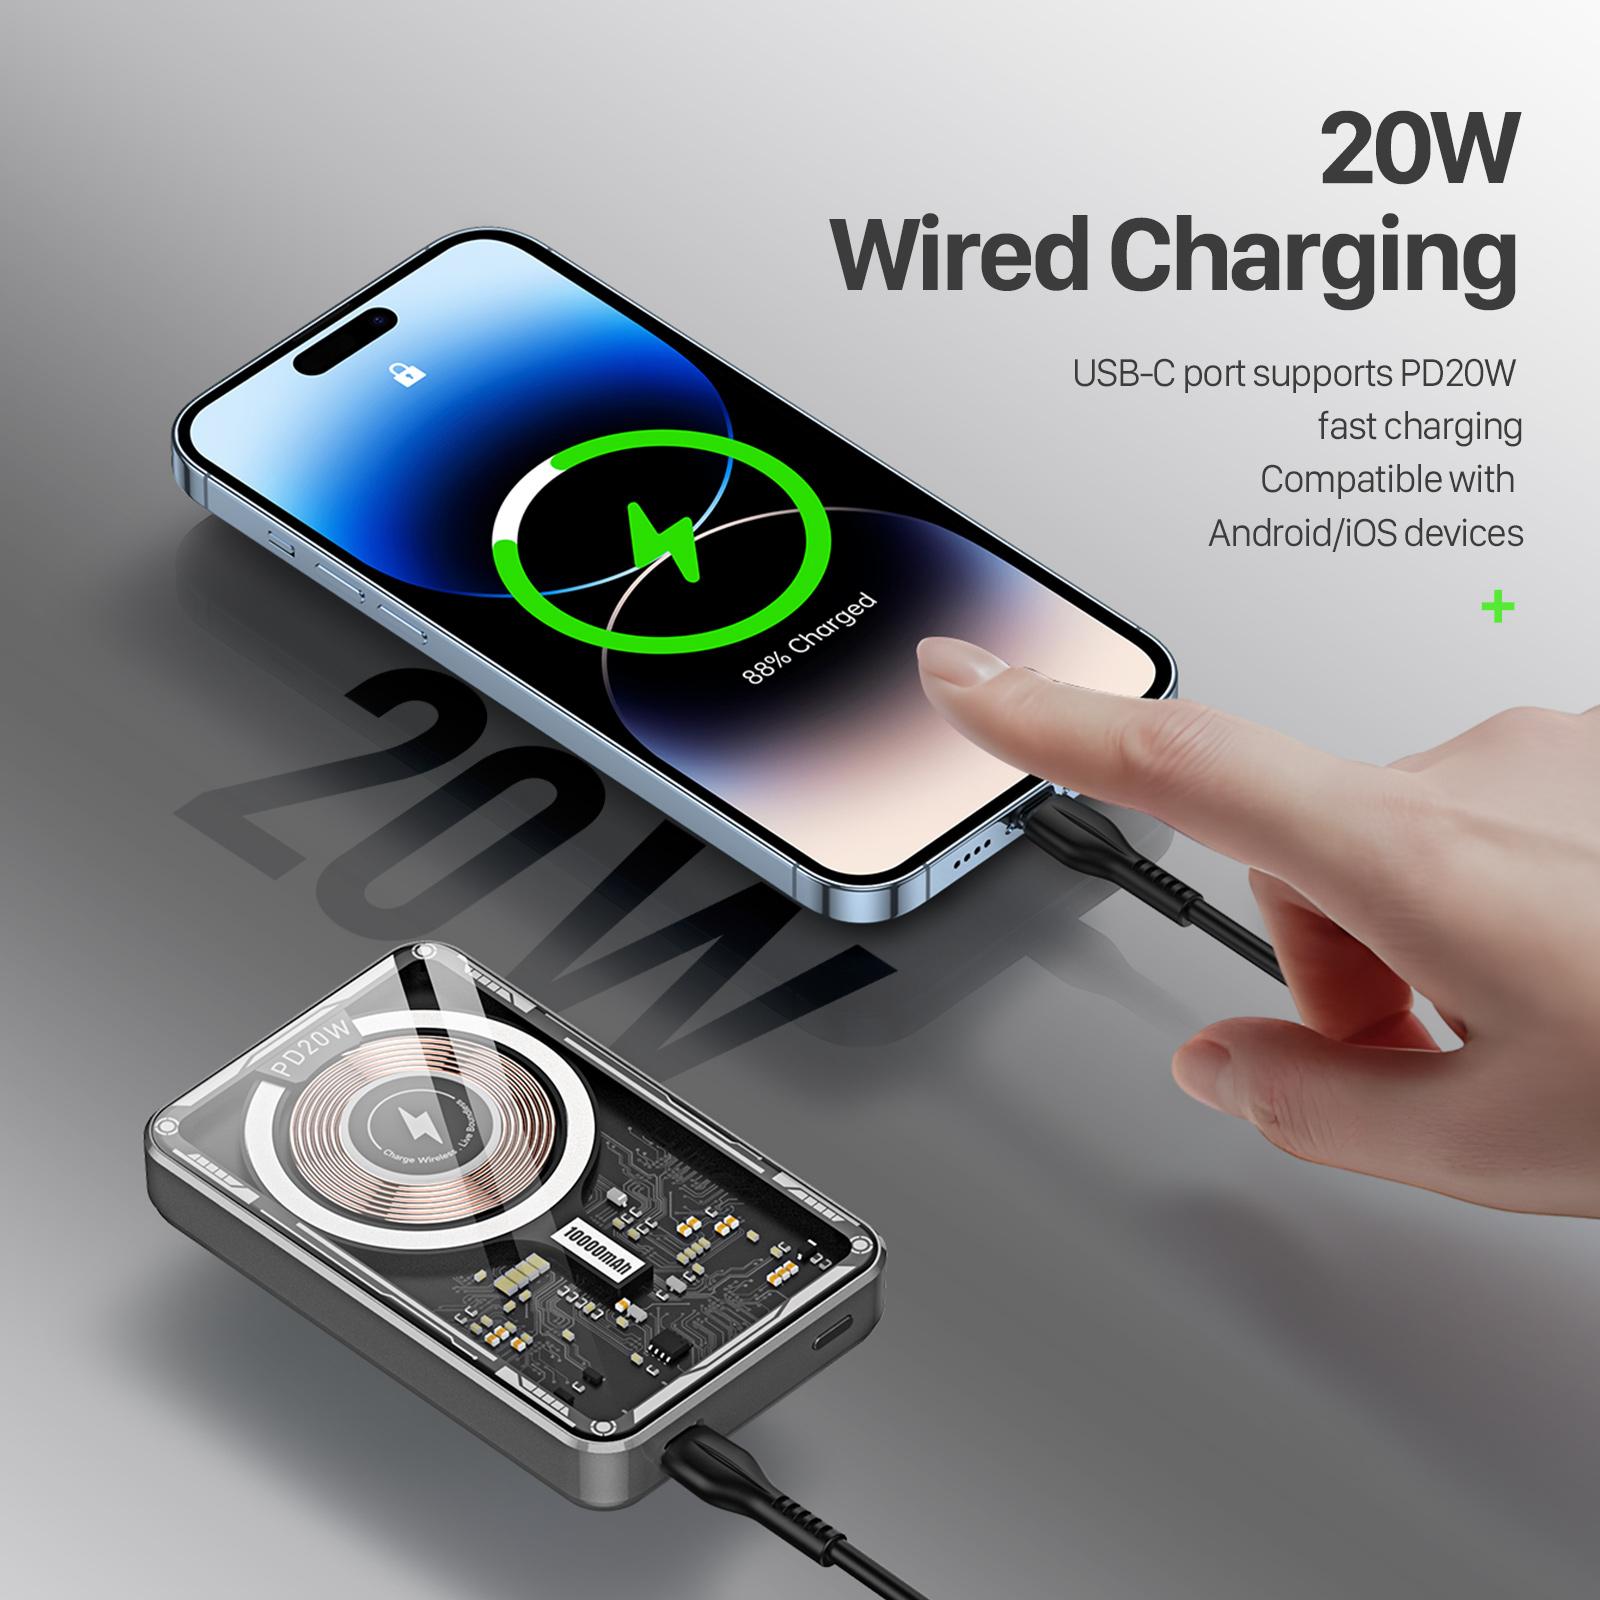 Duzzona W12 Transparent Magnetic Wireless Power Bank 10000mAh